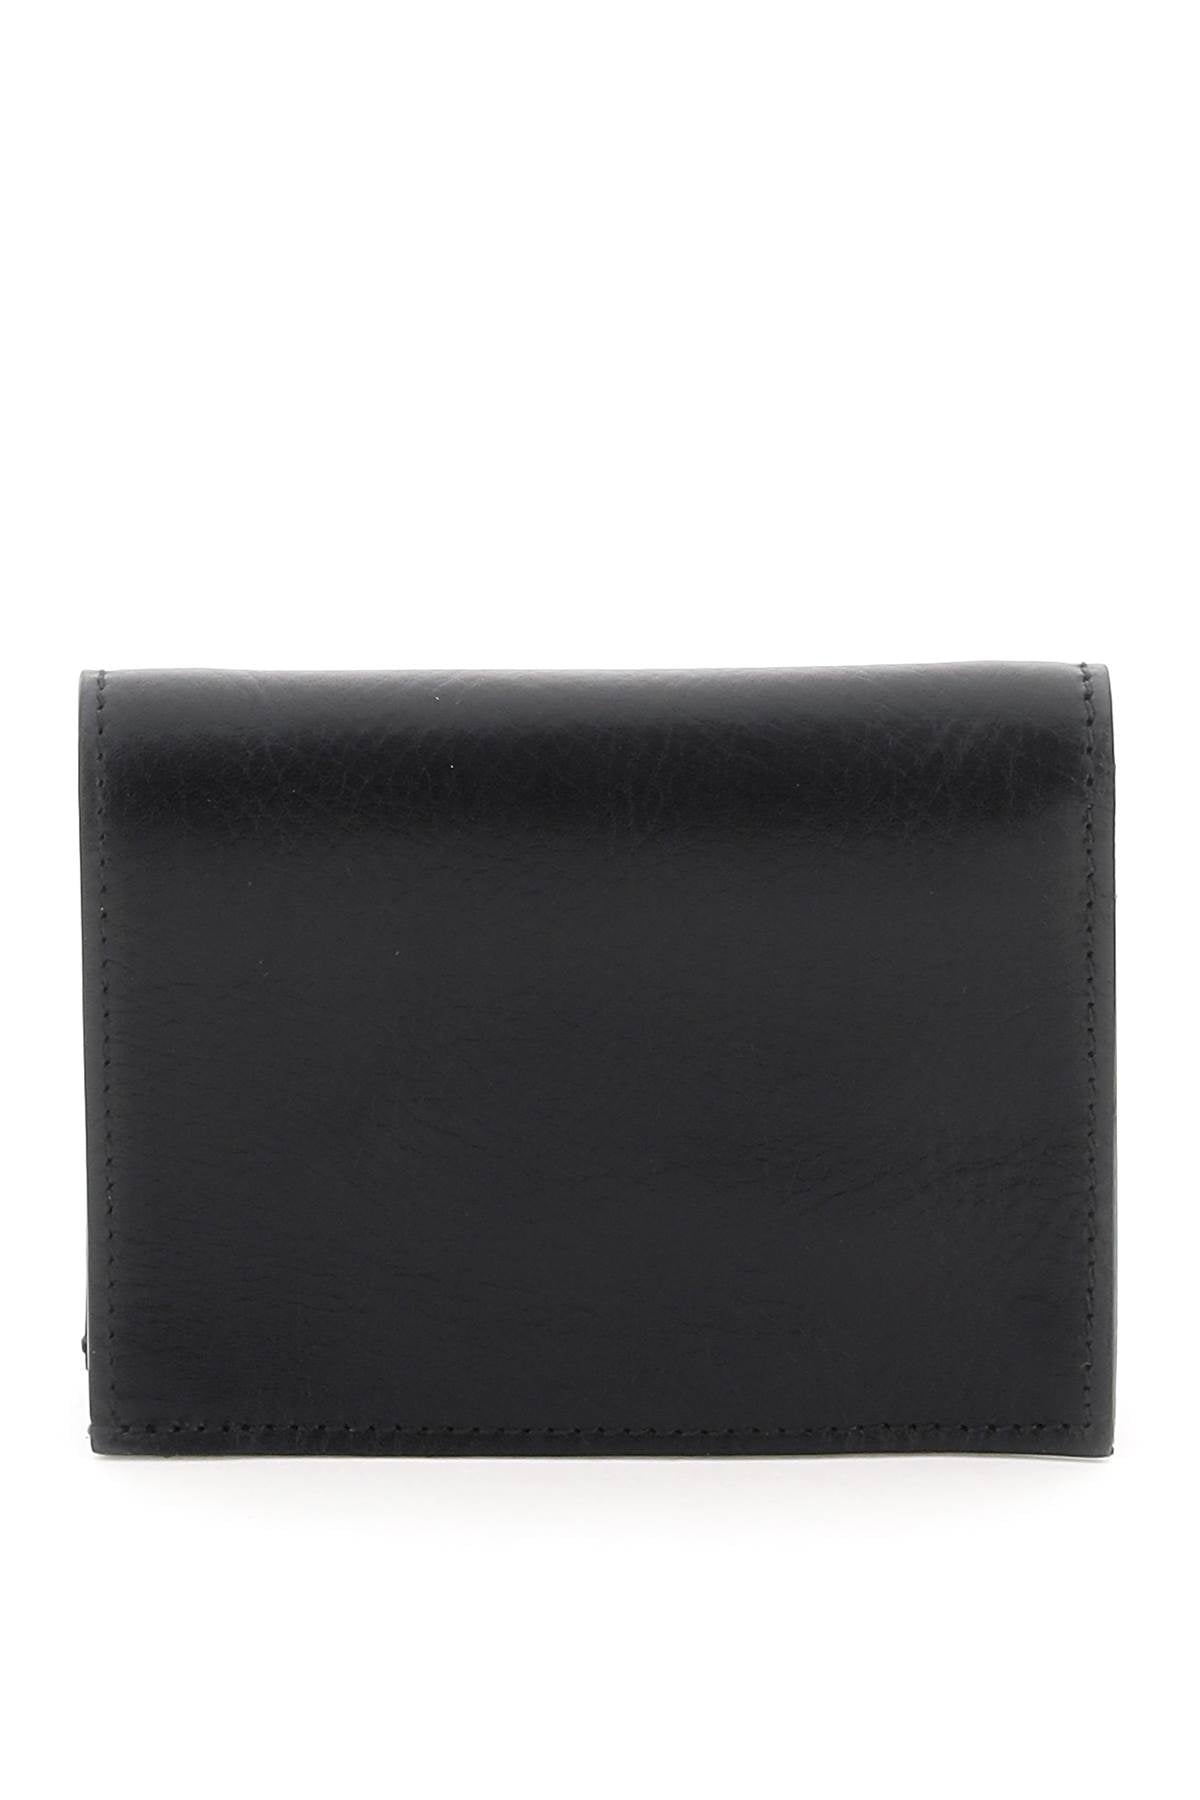 Il bisonte leather wallet-2